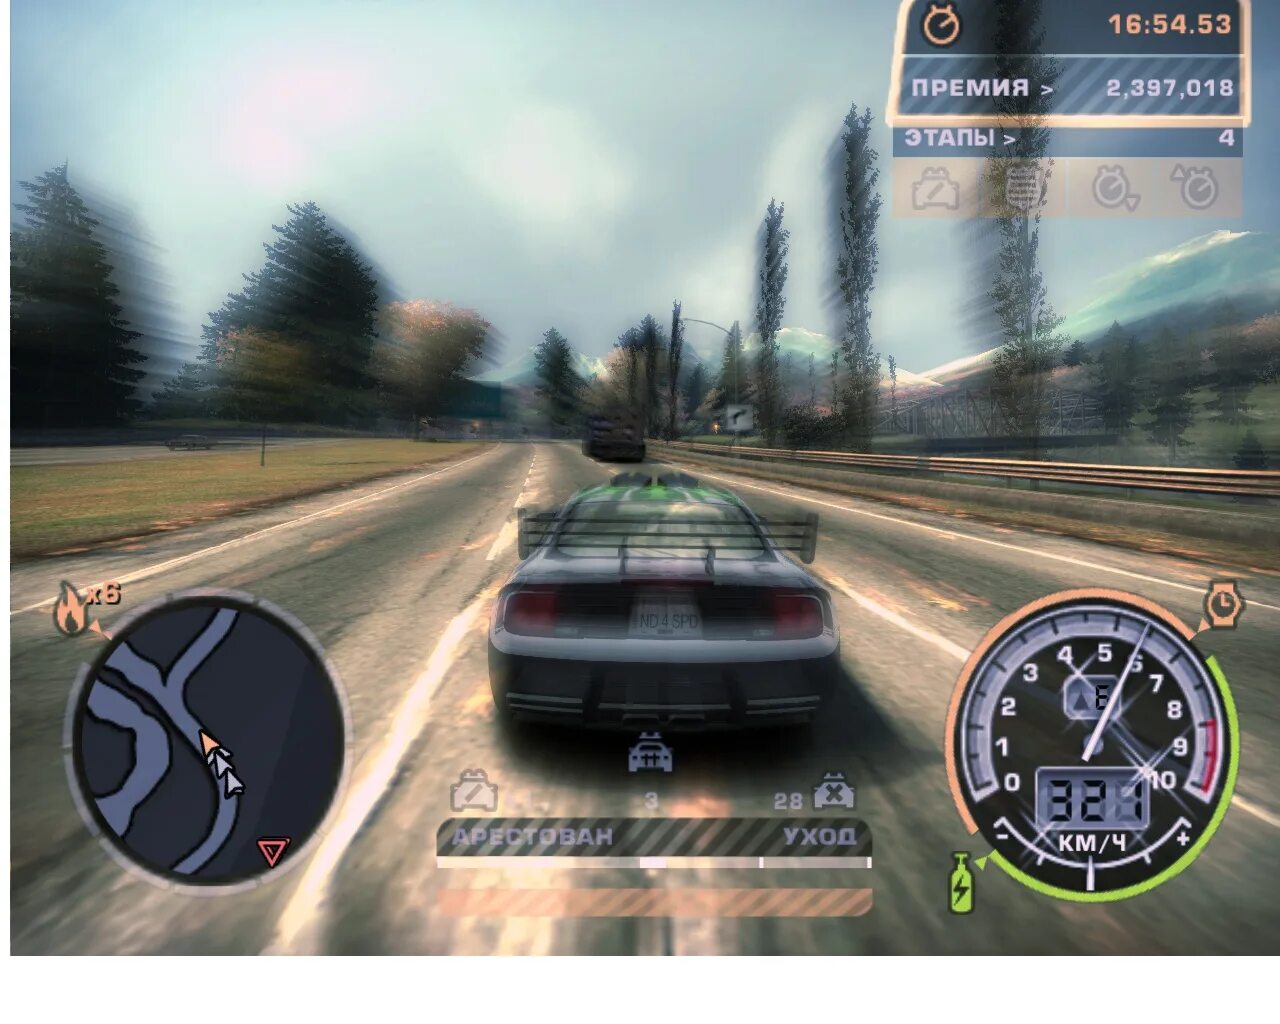 Брейк тест в nfs. NFS most wanted 2005 mobile. Need for Speed most wanted java игры. Как открыть весь тюнинг в NFS most wanted. Нфс как пройти шипы.